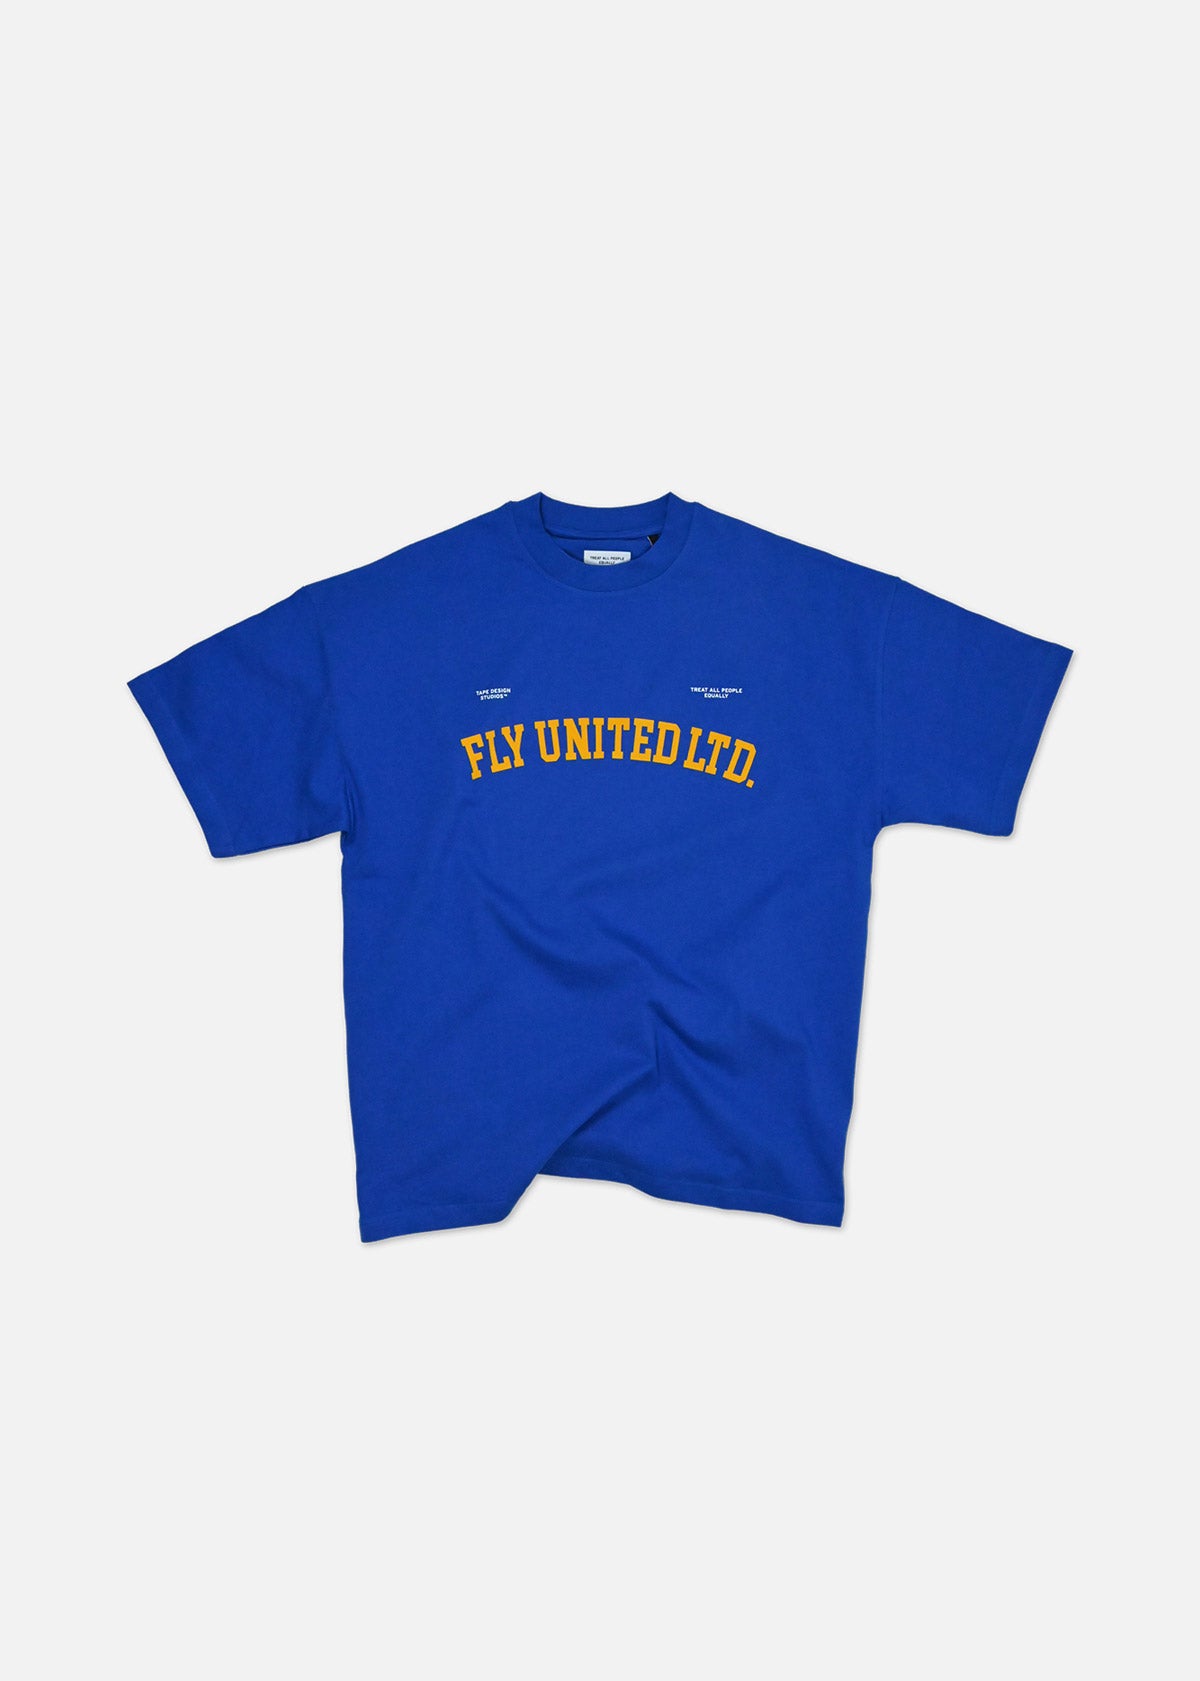 Fly United LTD. T-Shirt